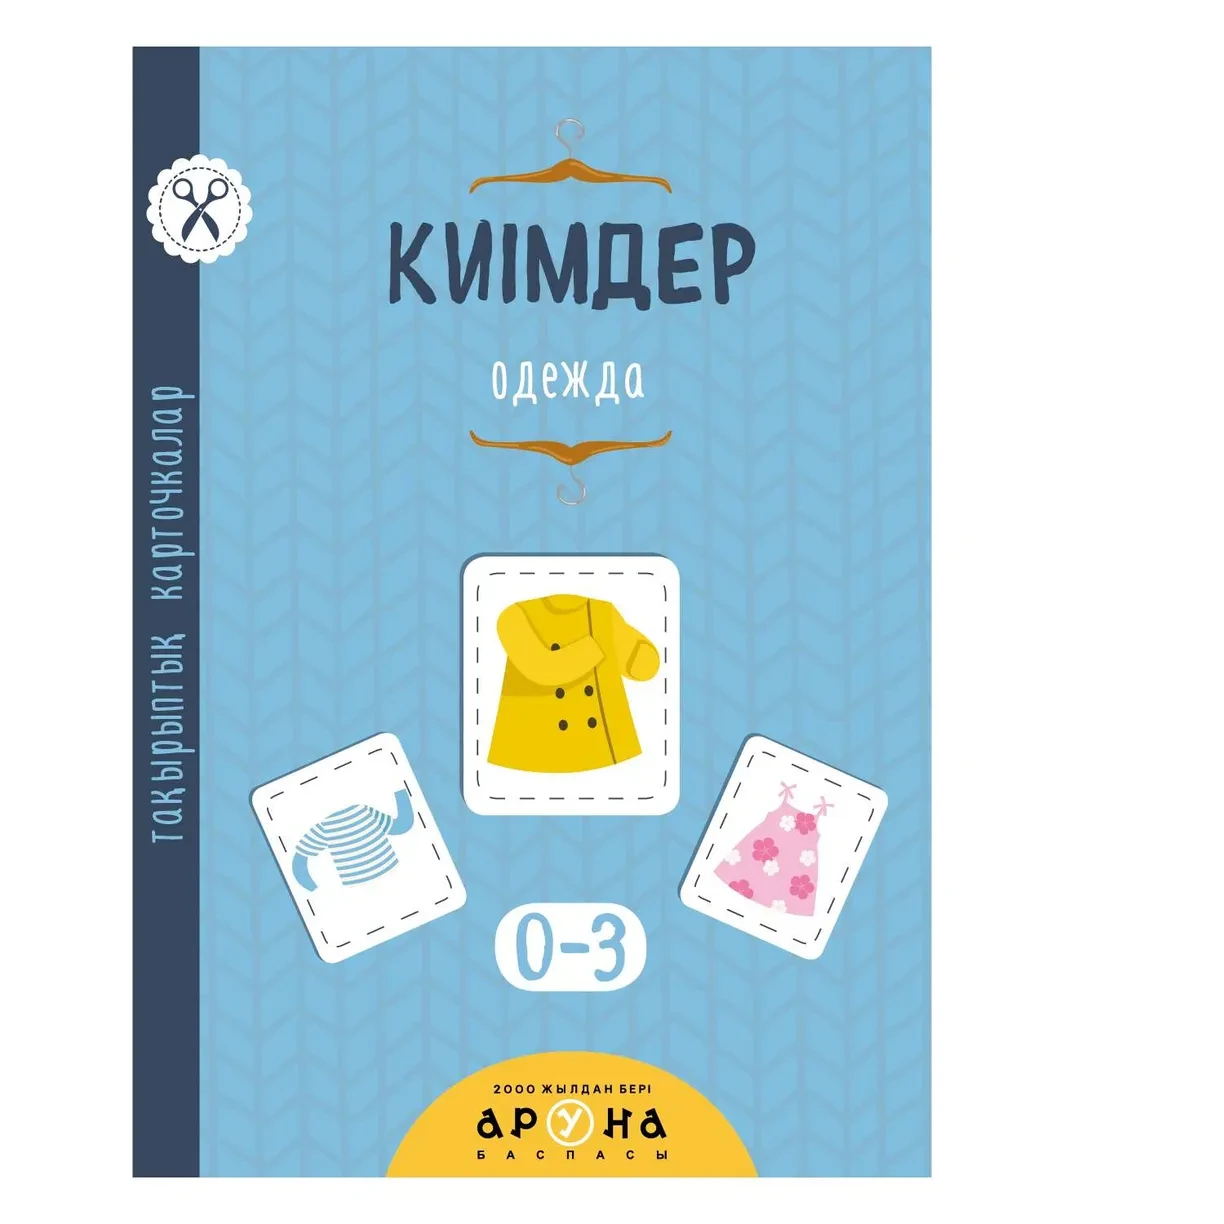 Тематические карточки: Kiımder на каз. яз. (Одежда) | Аруна Баспасы